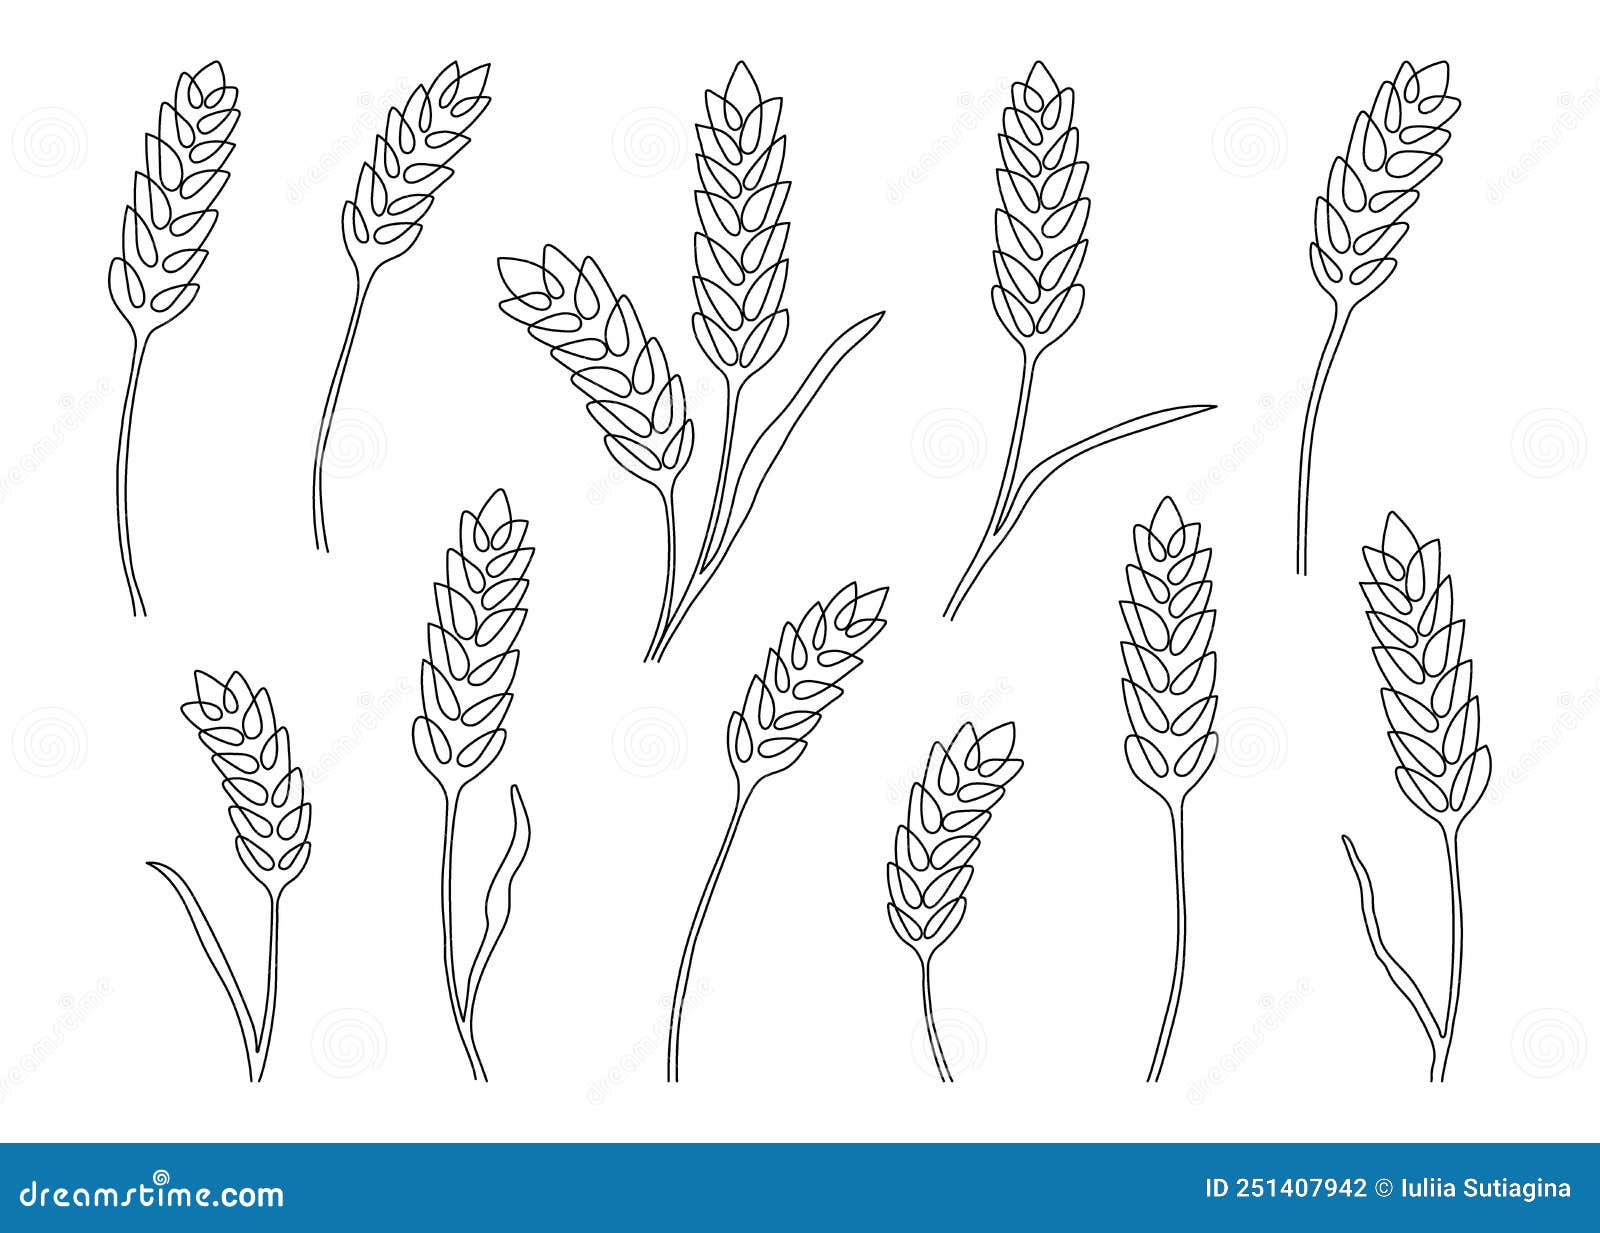 Drawings of Grains | Wheat Tattoo, Hand-drawn Illustration